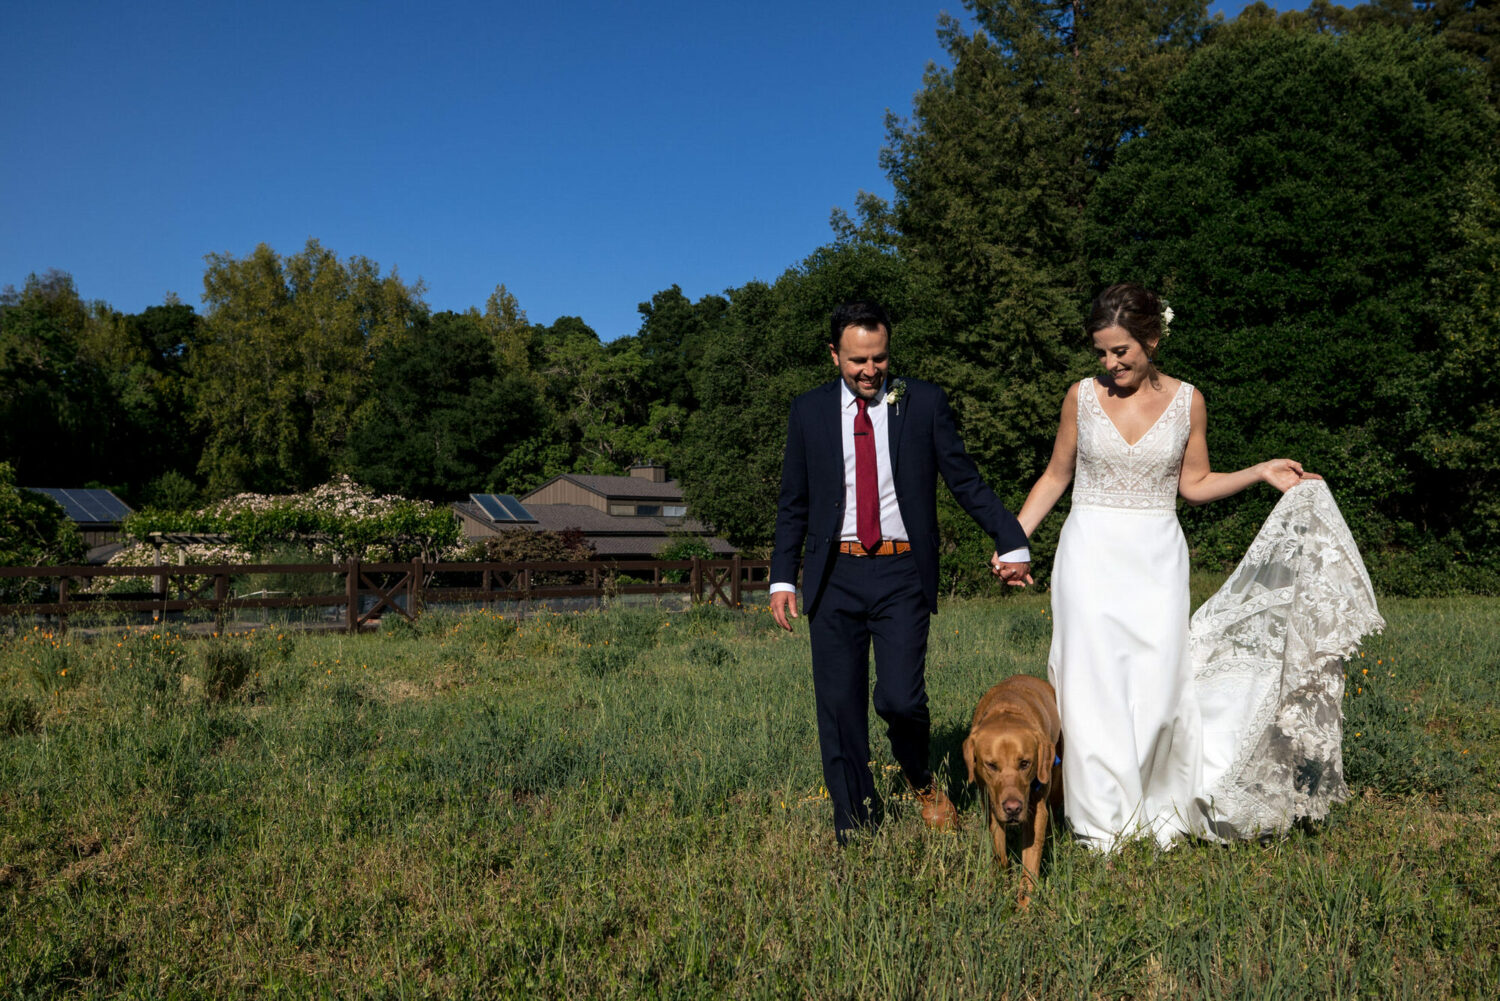 Backyard wedding with a dog.